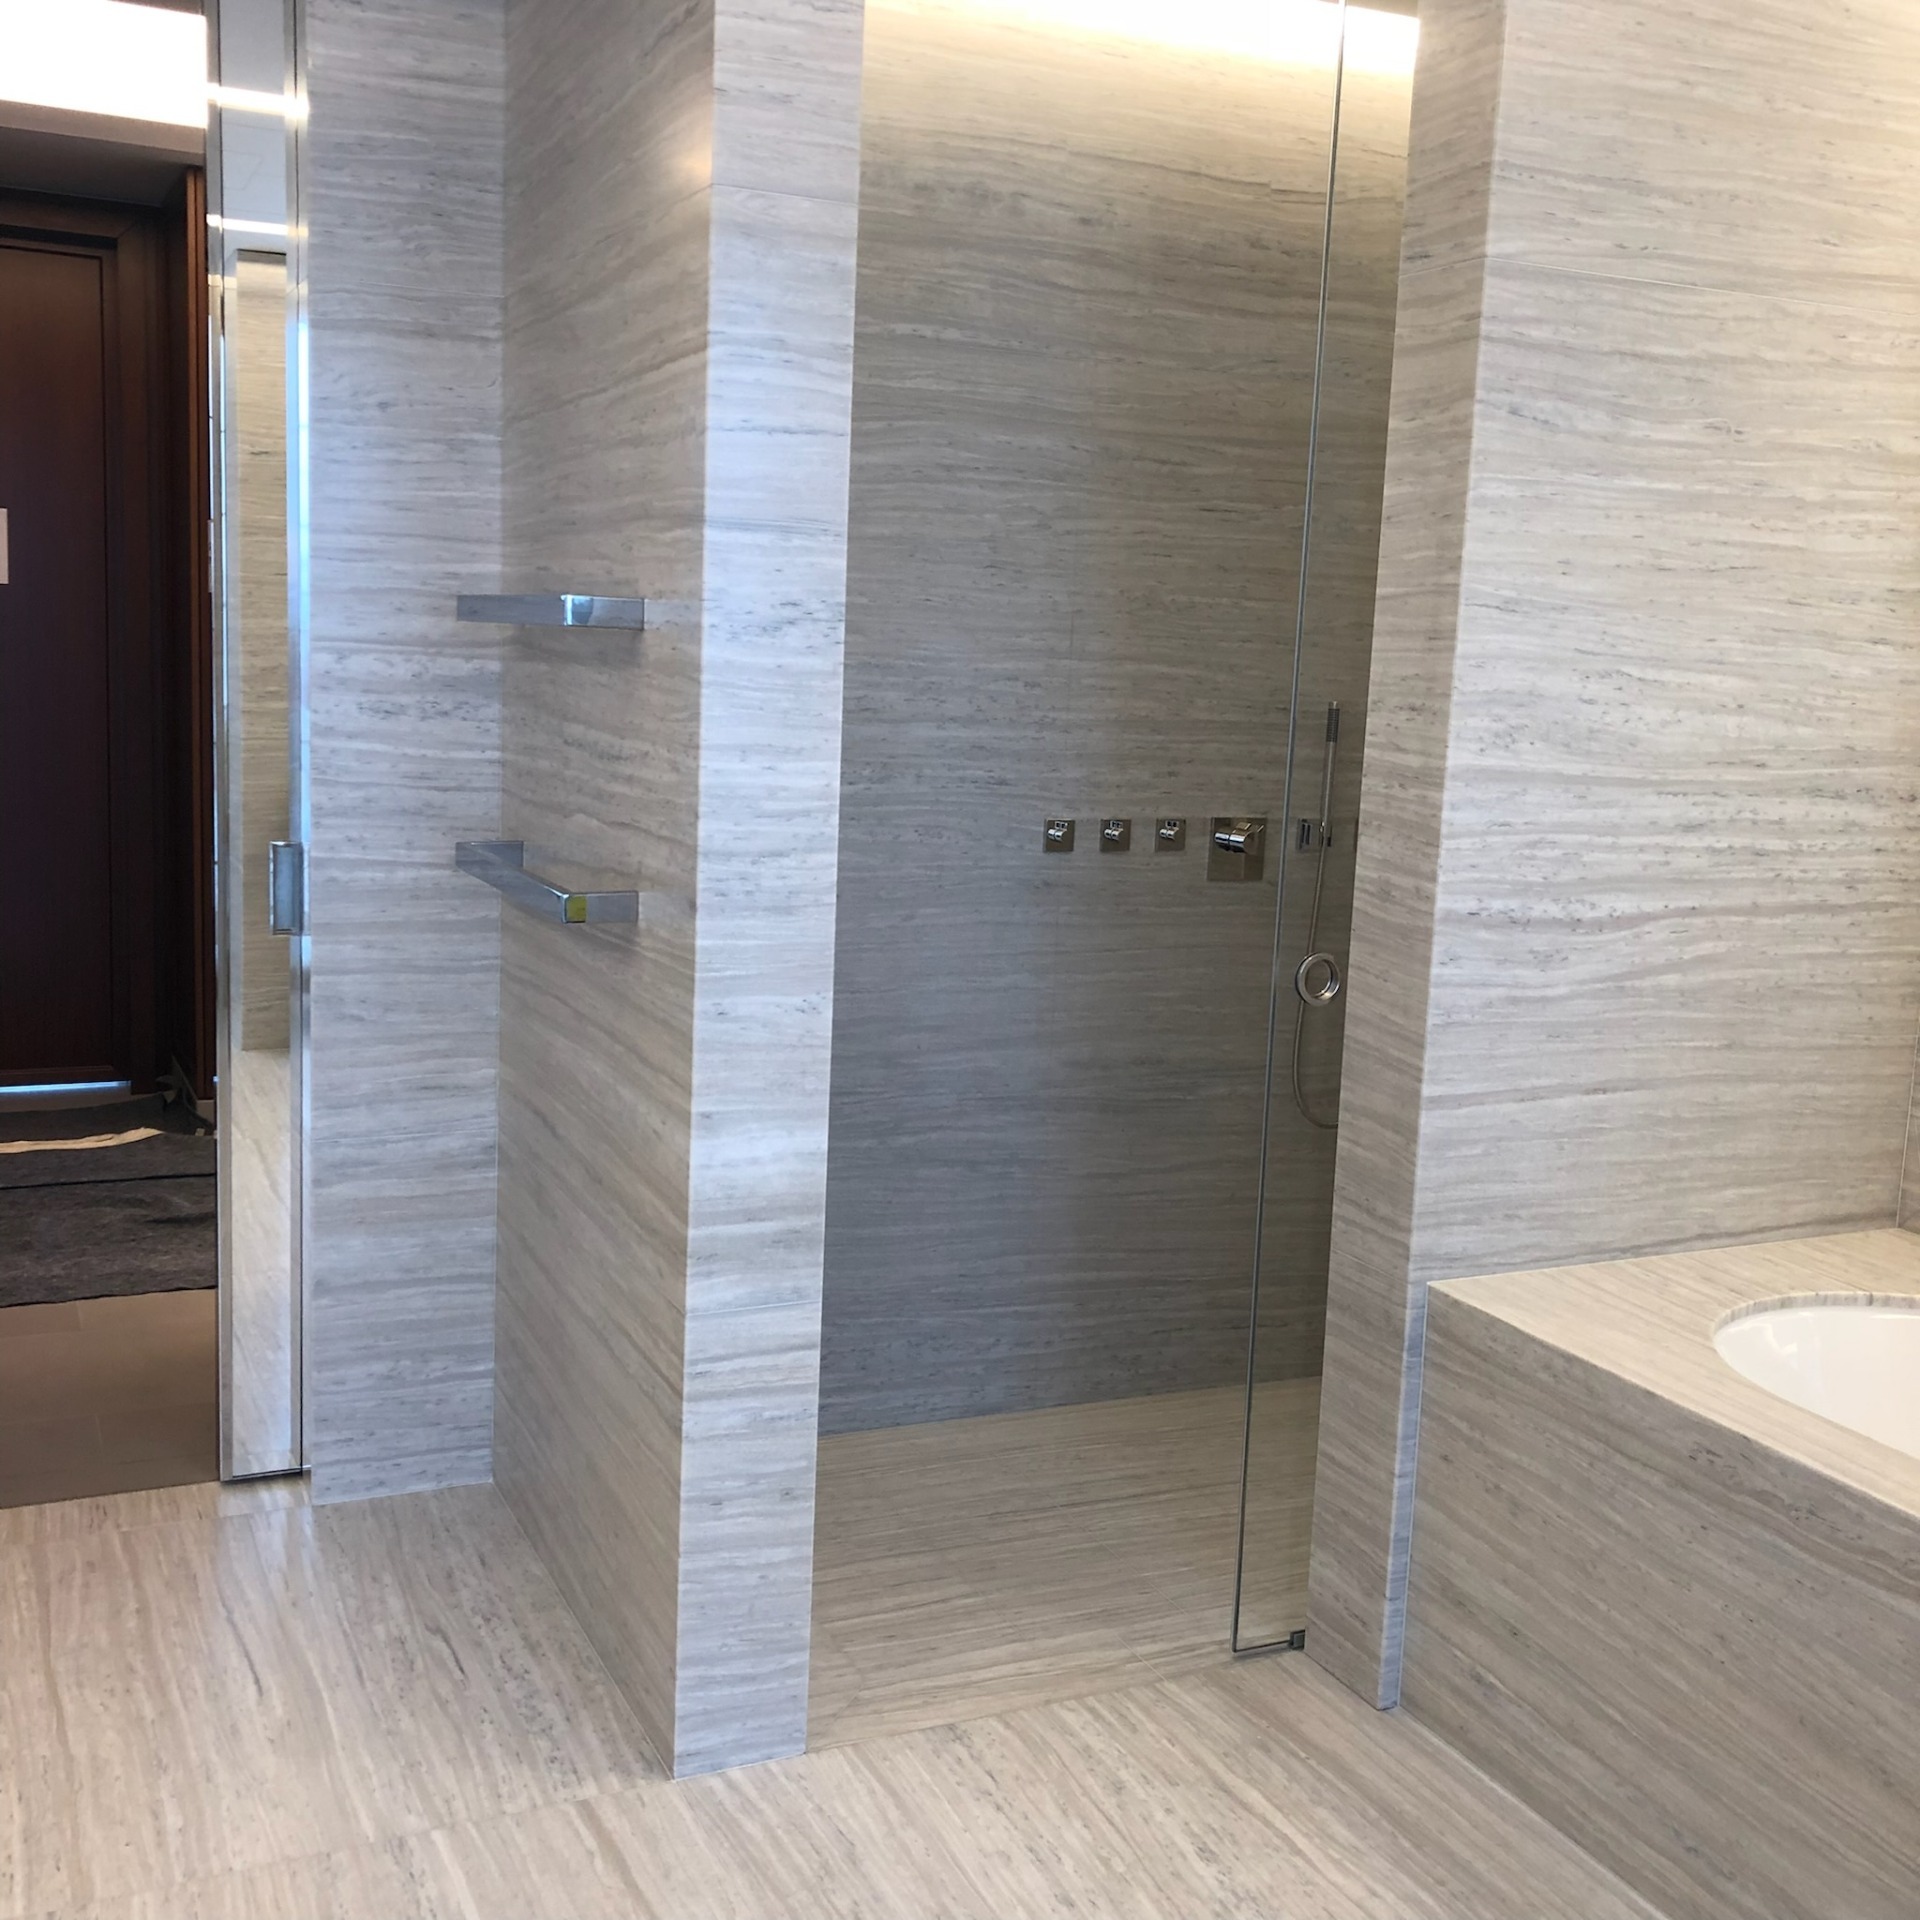 New bathroom with silicone sealant